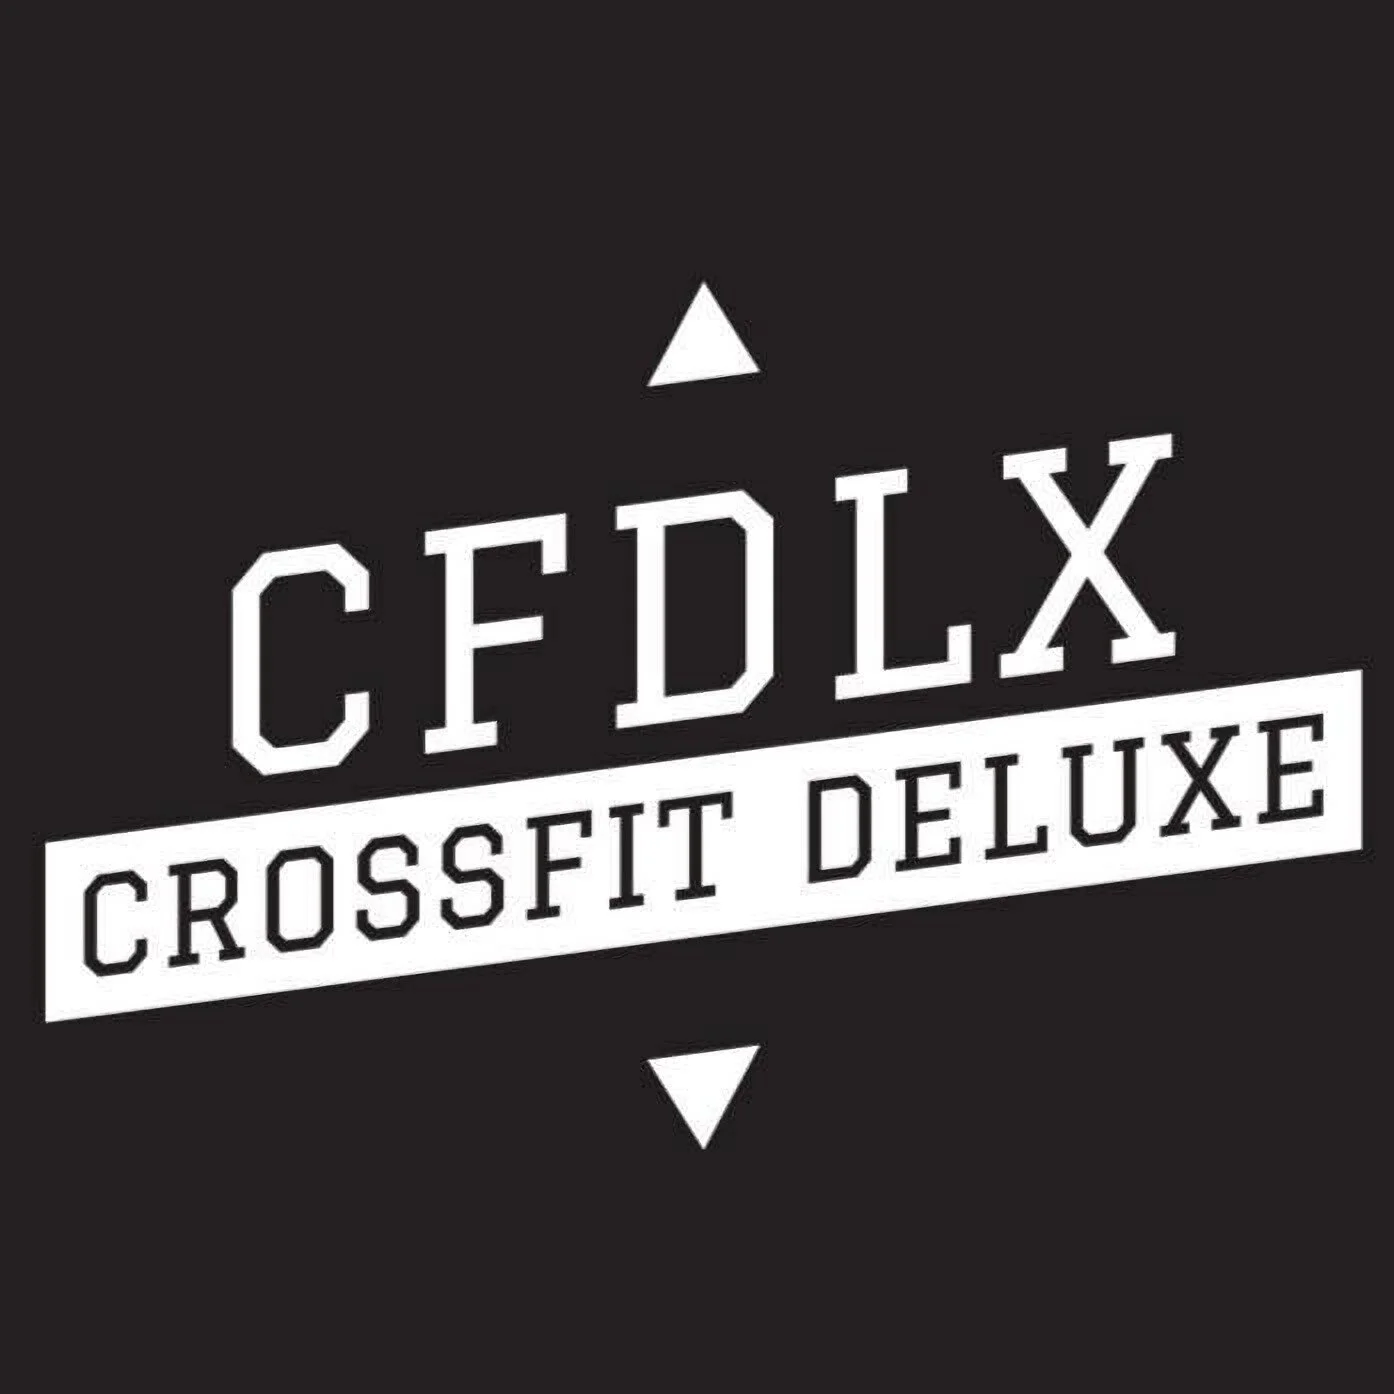 Crossfit-crossfit-deluxe-6908